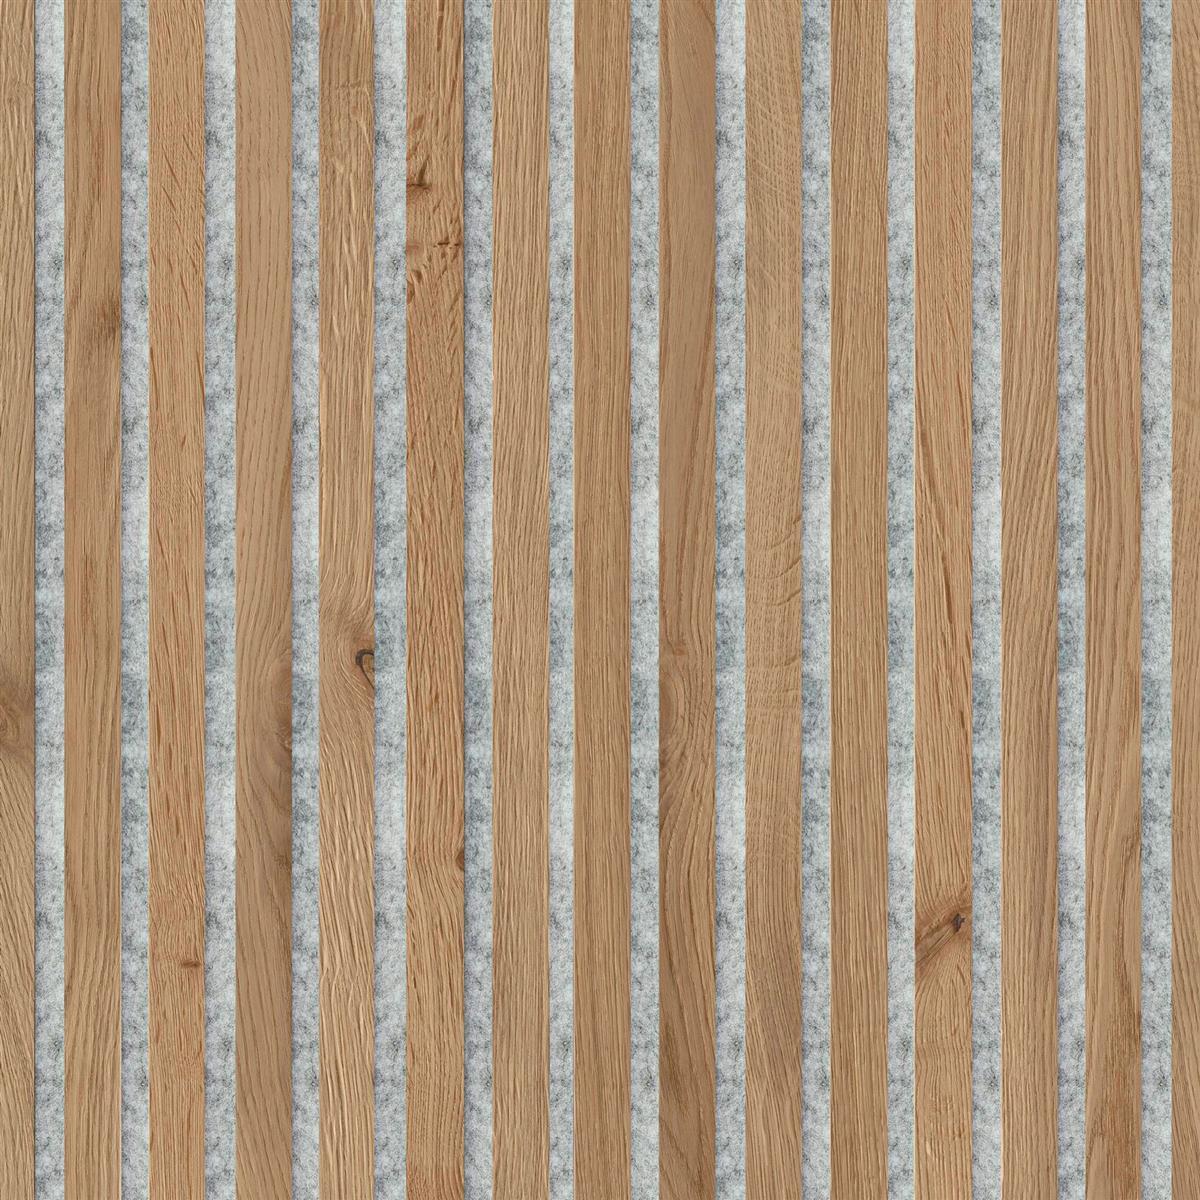 JOKA Paro Akustik Wandpaneele PAG350 279 cm Eiche Rustikal, graues Vlies - geölt Echtholzpaneel